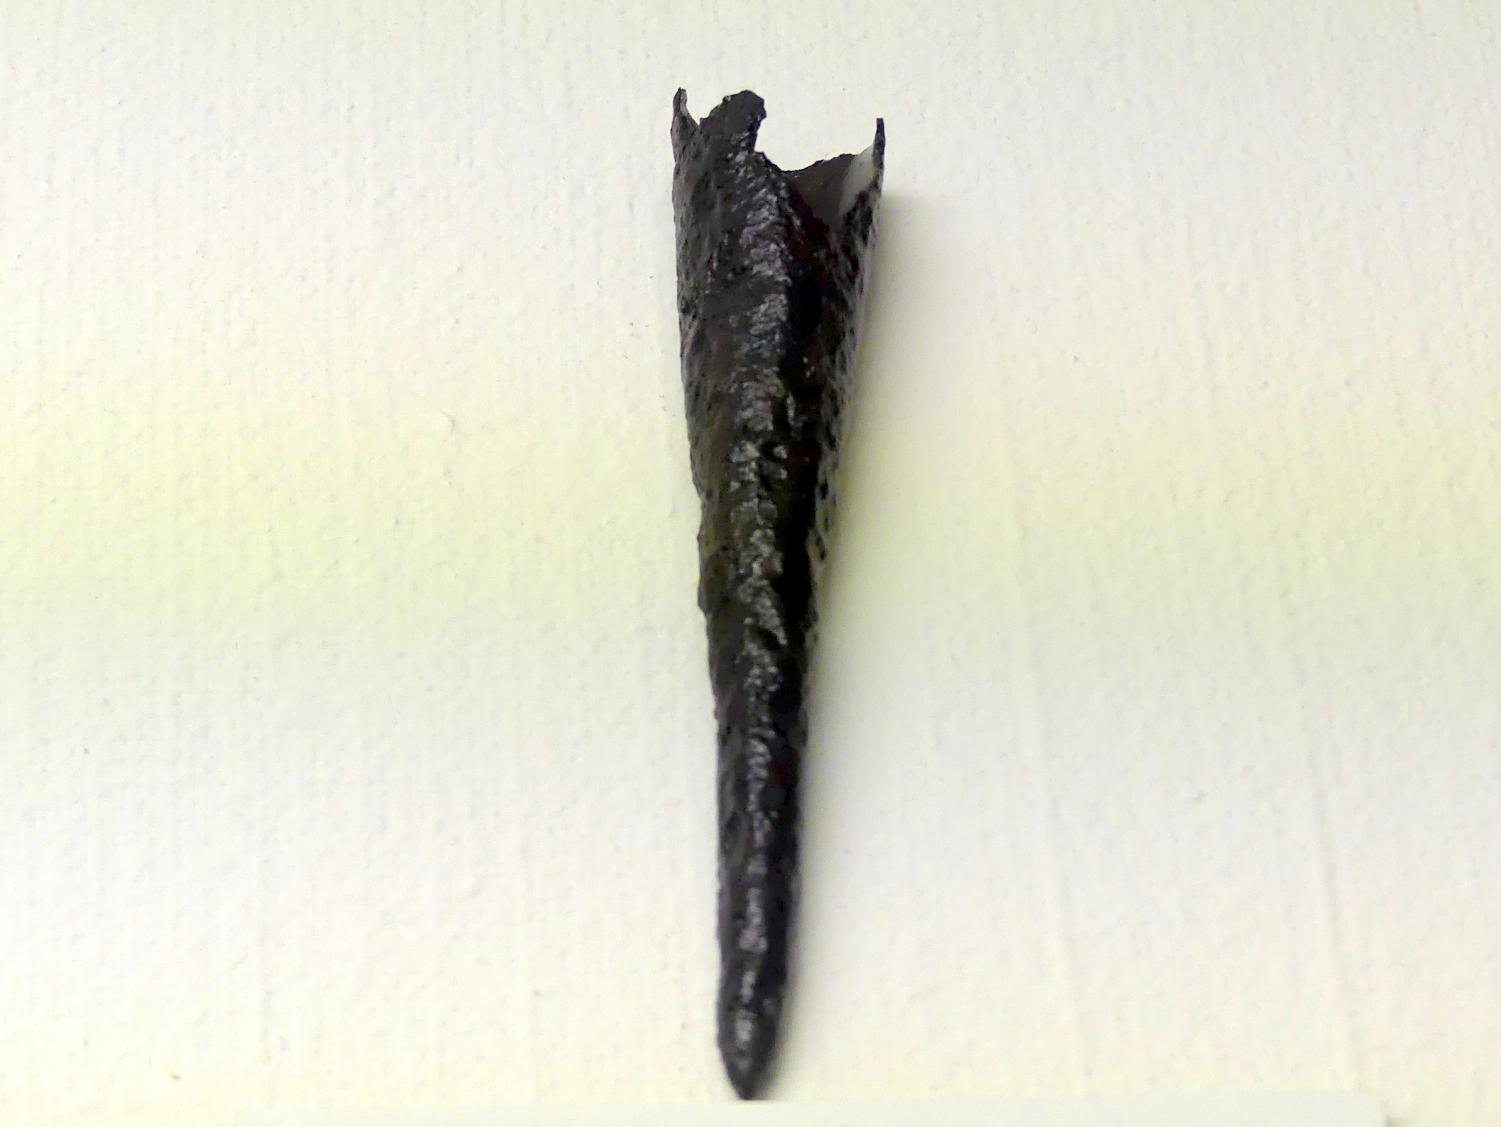 Lanzenschuh, Spätlatènezeit D, 700 - 100 v. Chr., Bild 1/2